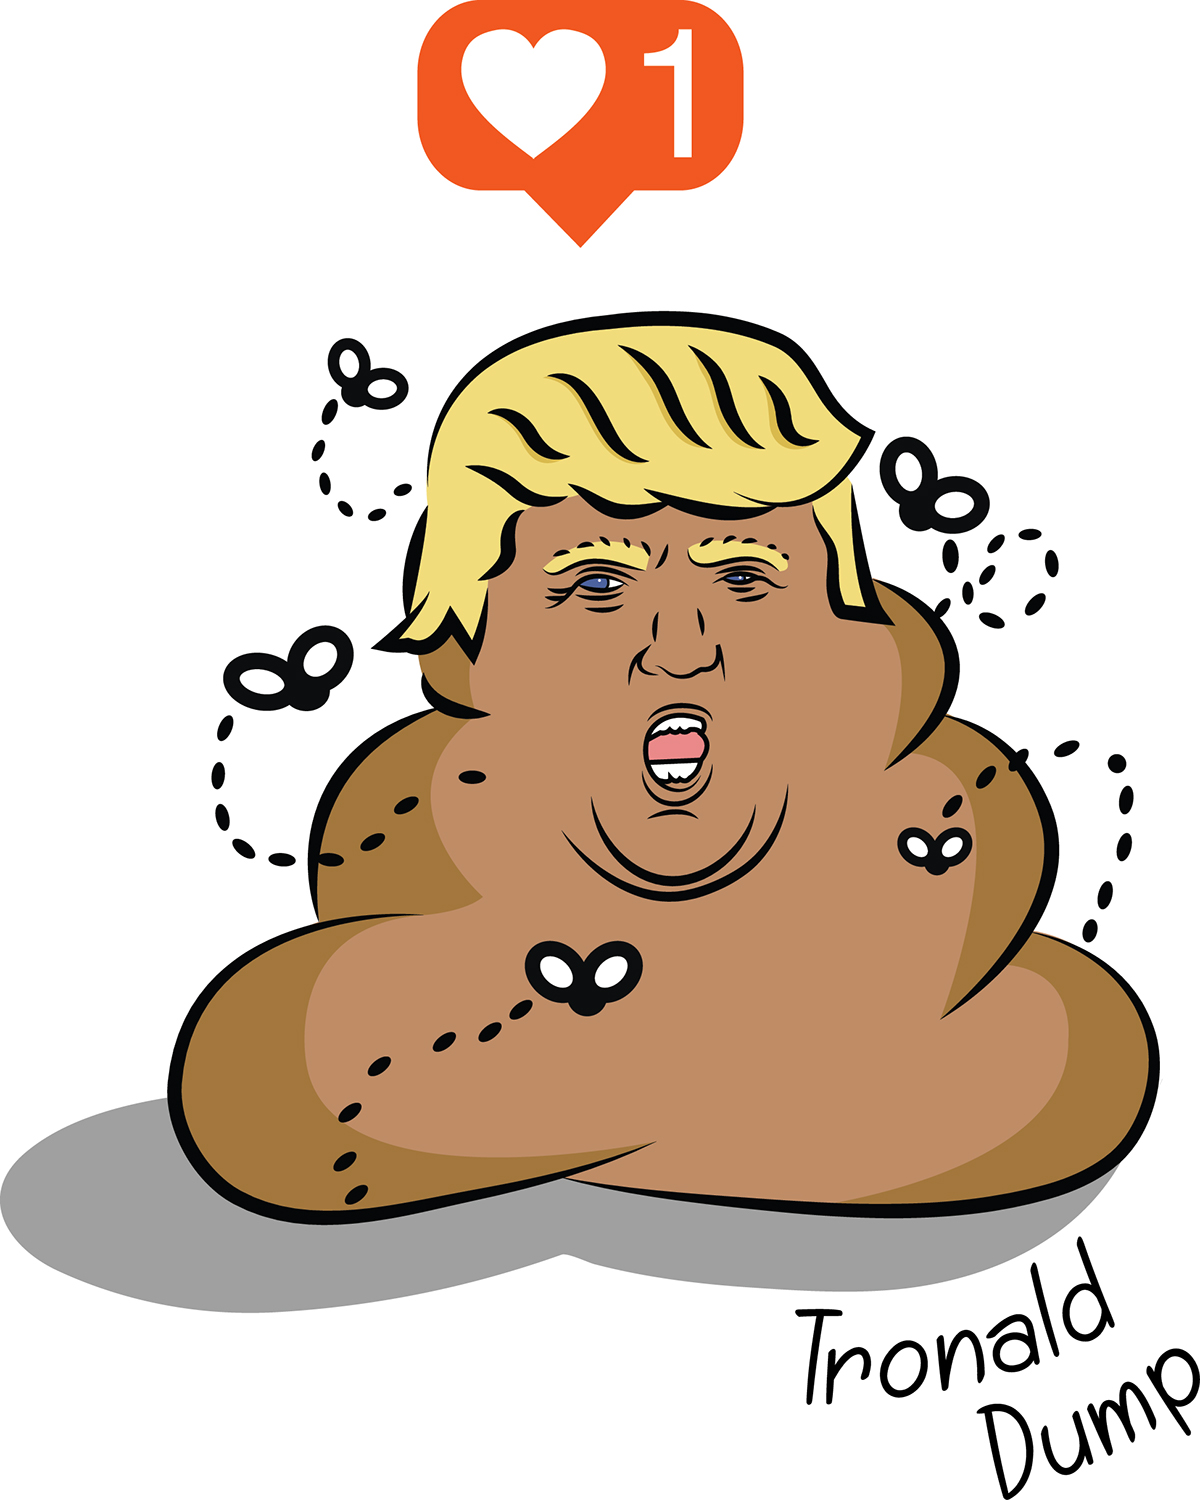 donald Trump cartoon design Illustrative politics Dump